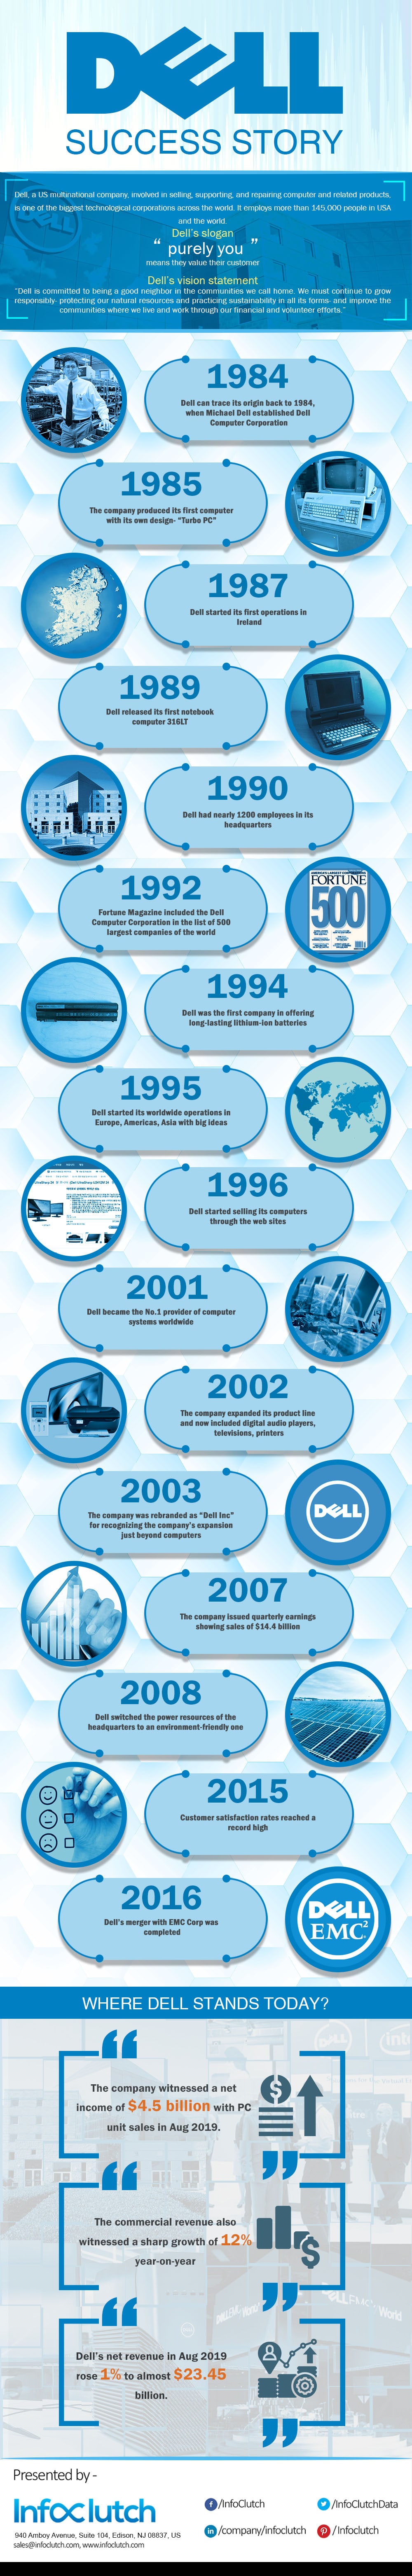 Success Story of Dell Milestones & Achievements